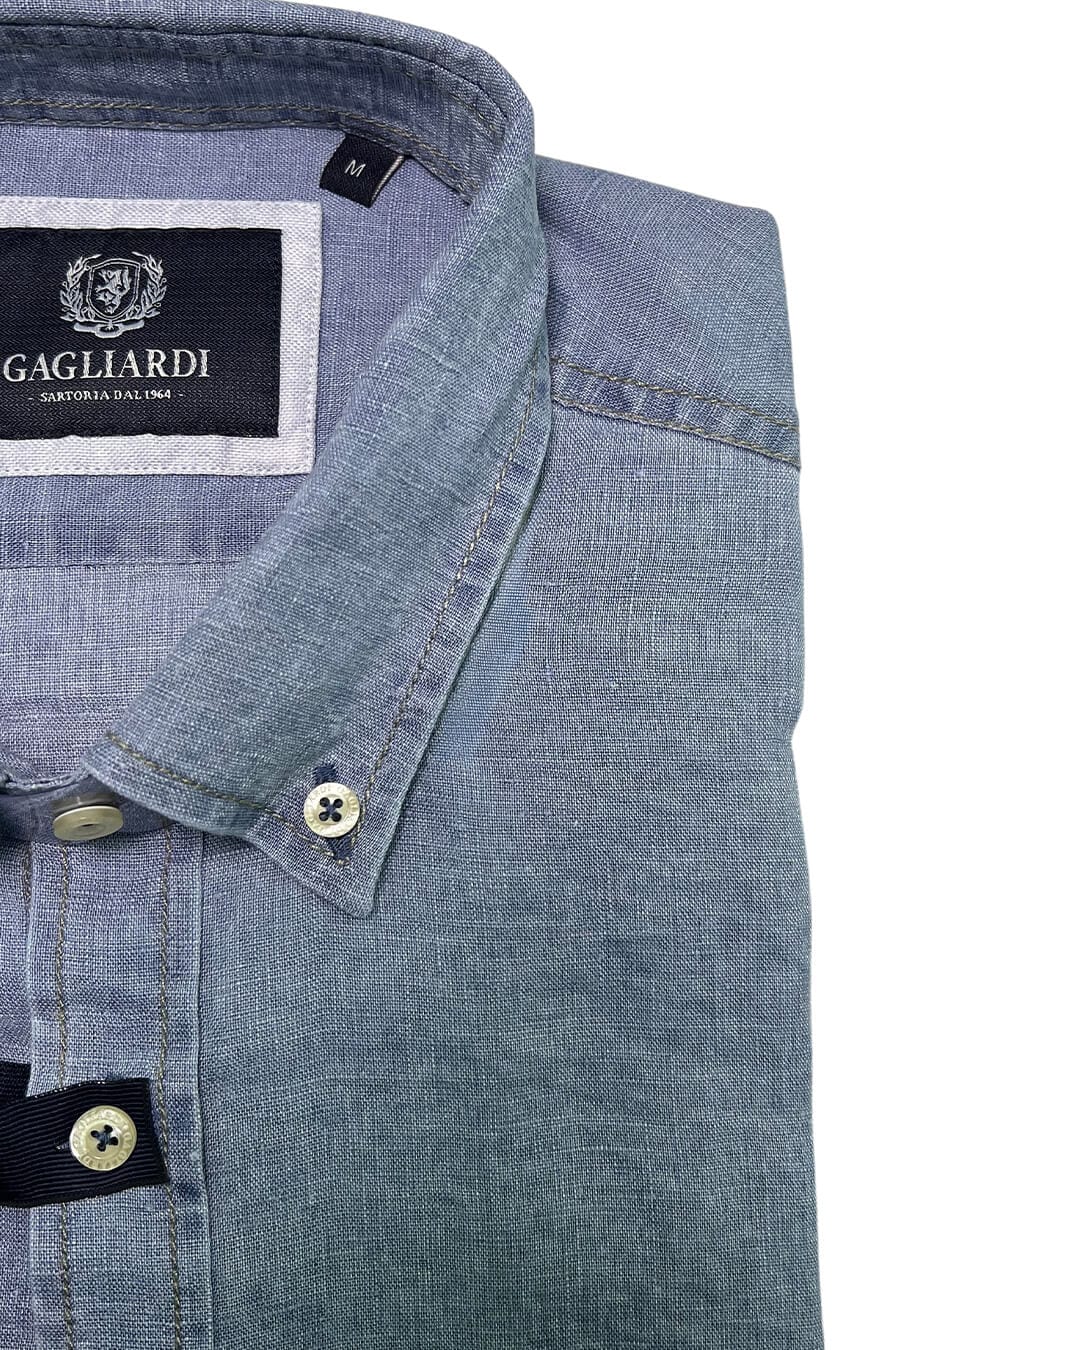 Gagliardi Shirts Gagliardi Mid Blue Washed Cotton Linen Shirt